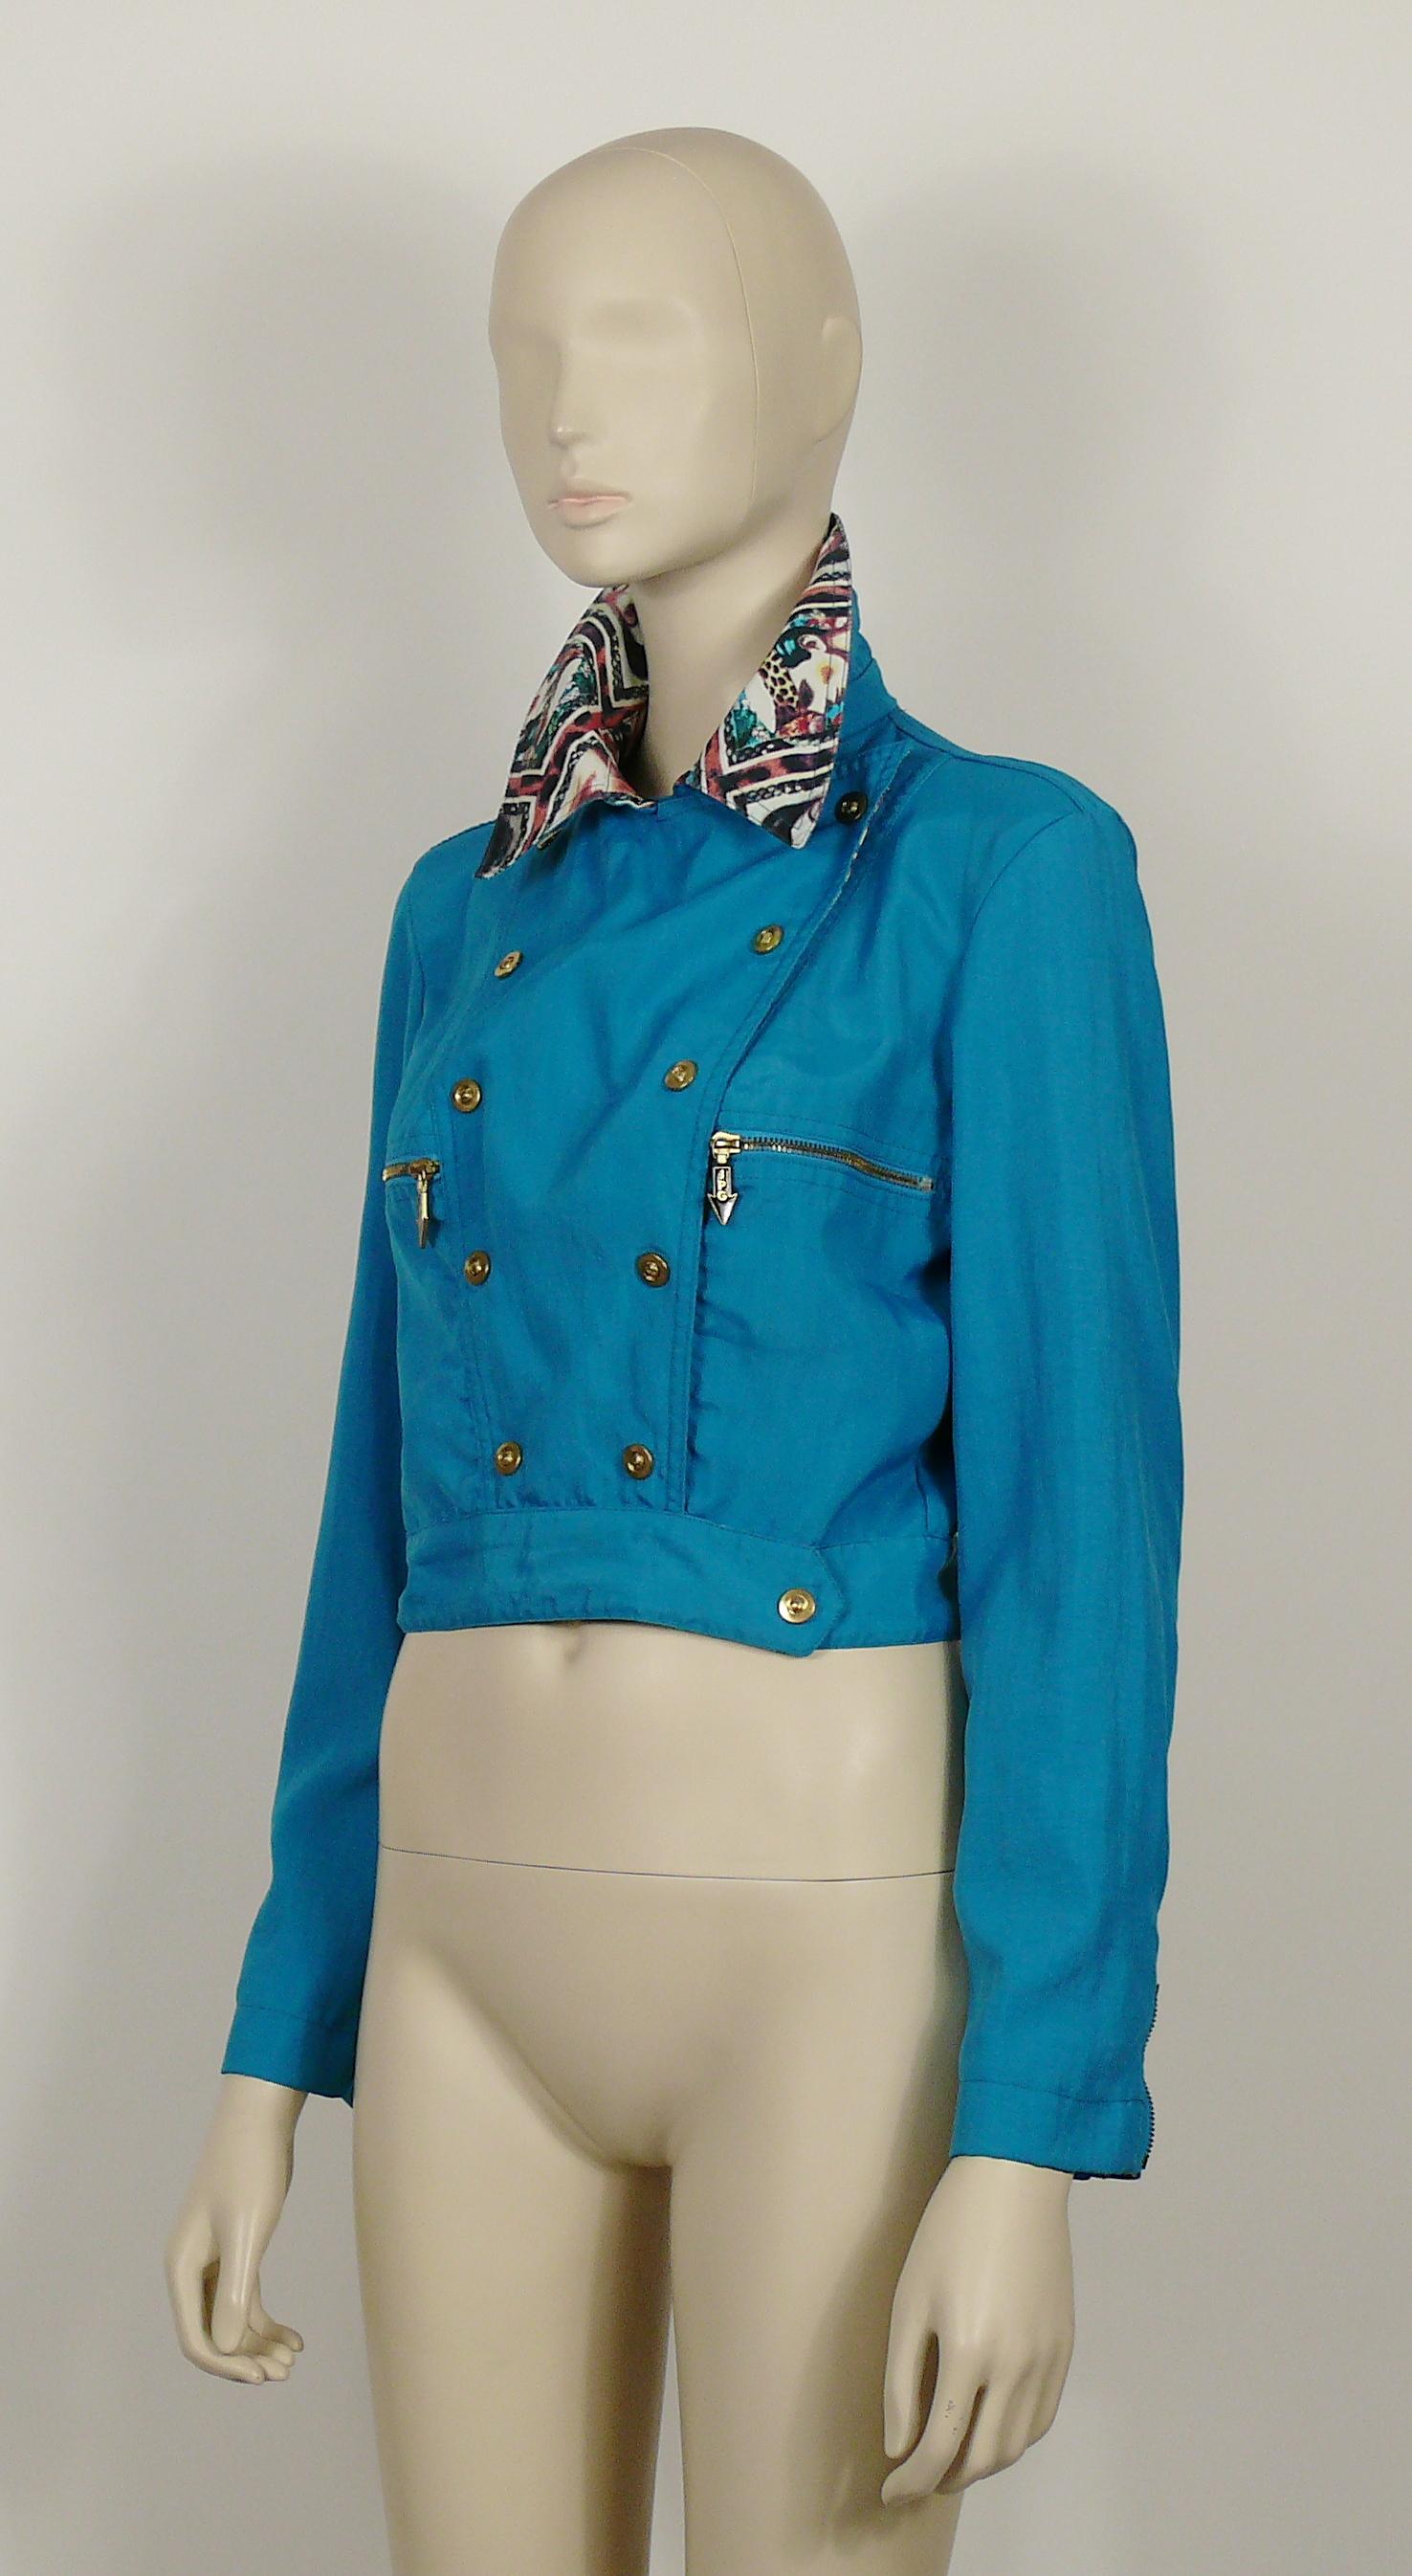 Jean Paul Gaultier Vintage Blue Cropped Biker Jacket with Portraits Details For Sale 5